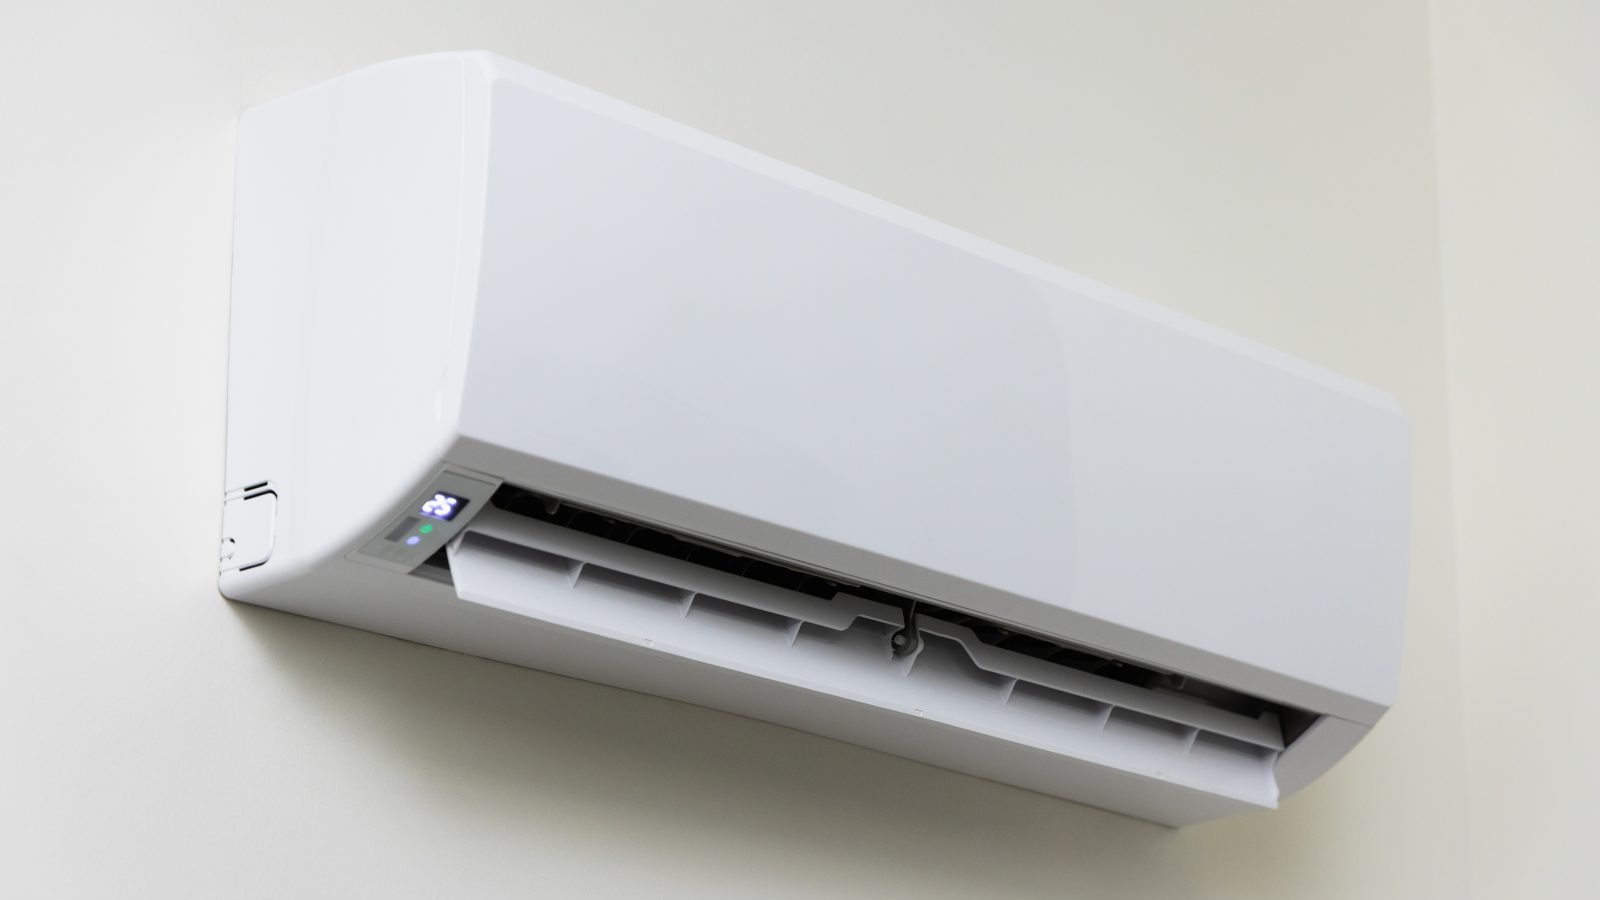 smart air conditioner